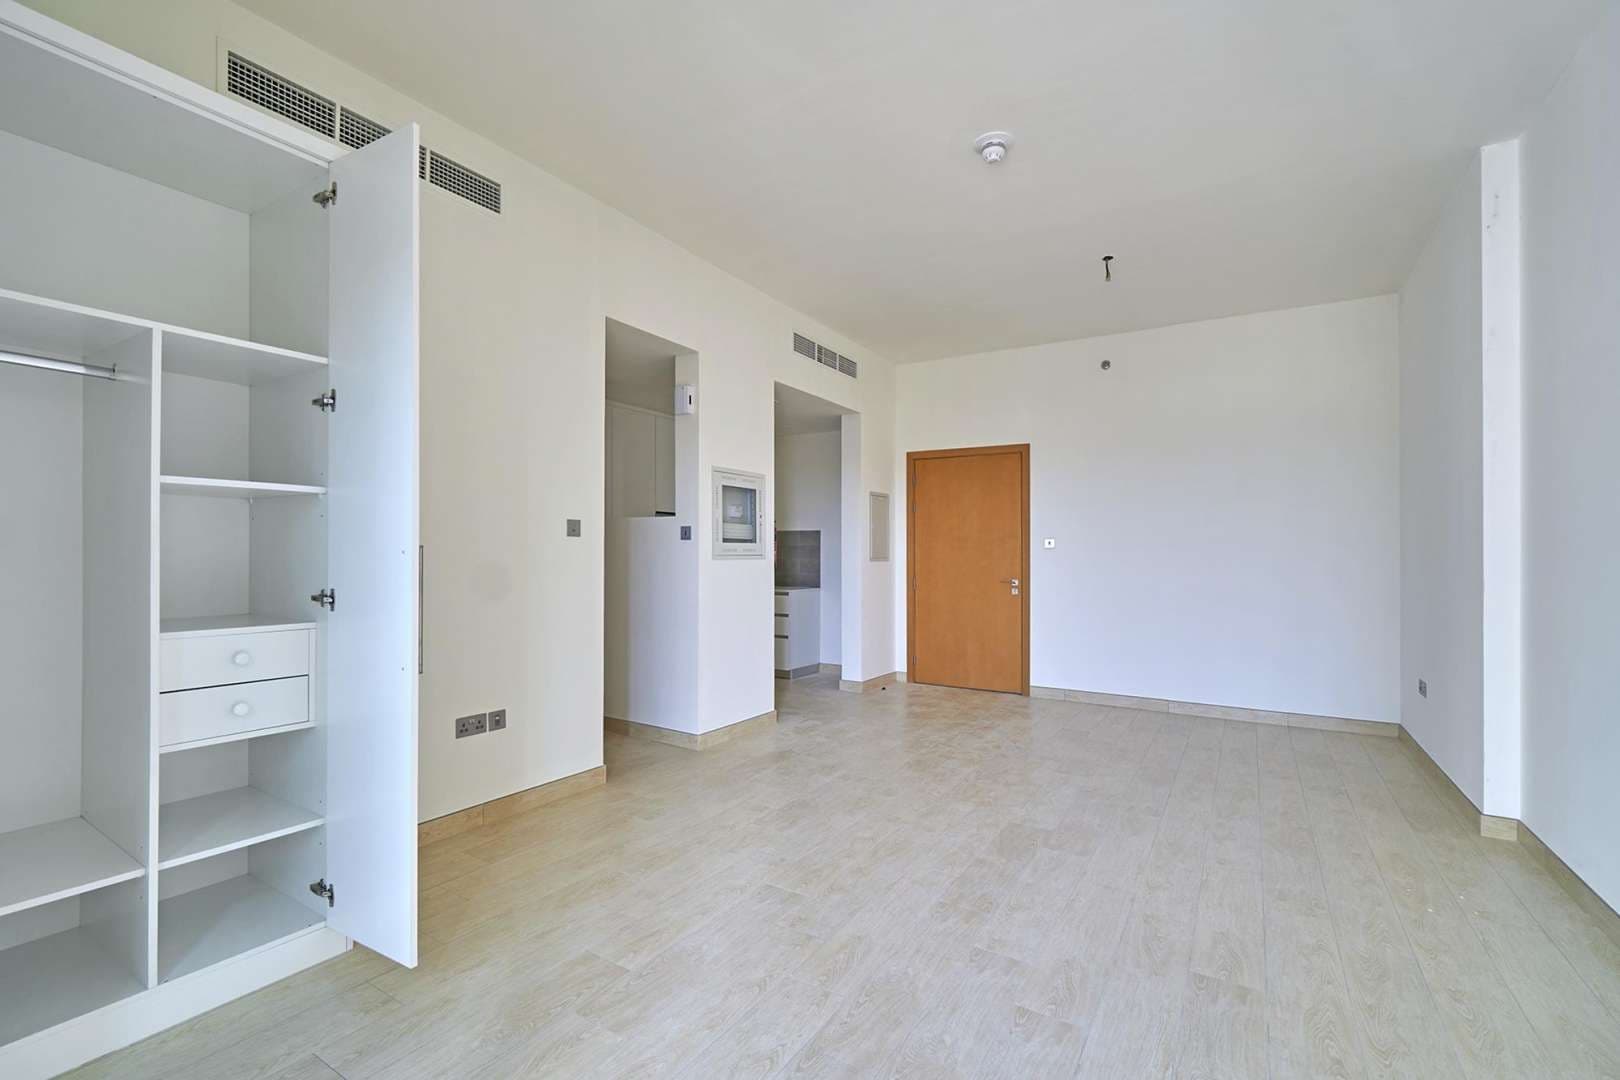 Studio Bedroom Apartment For Rent Genesis By Meraki Lp06173 2dc64c80e6960600.jpg